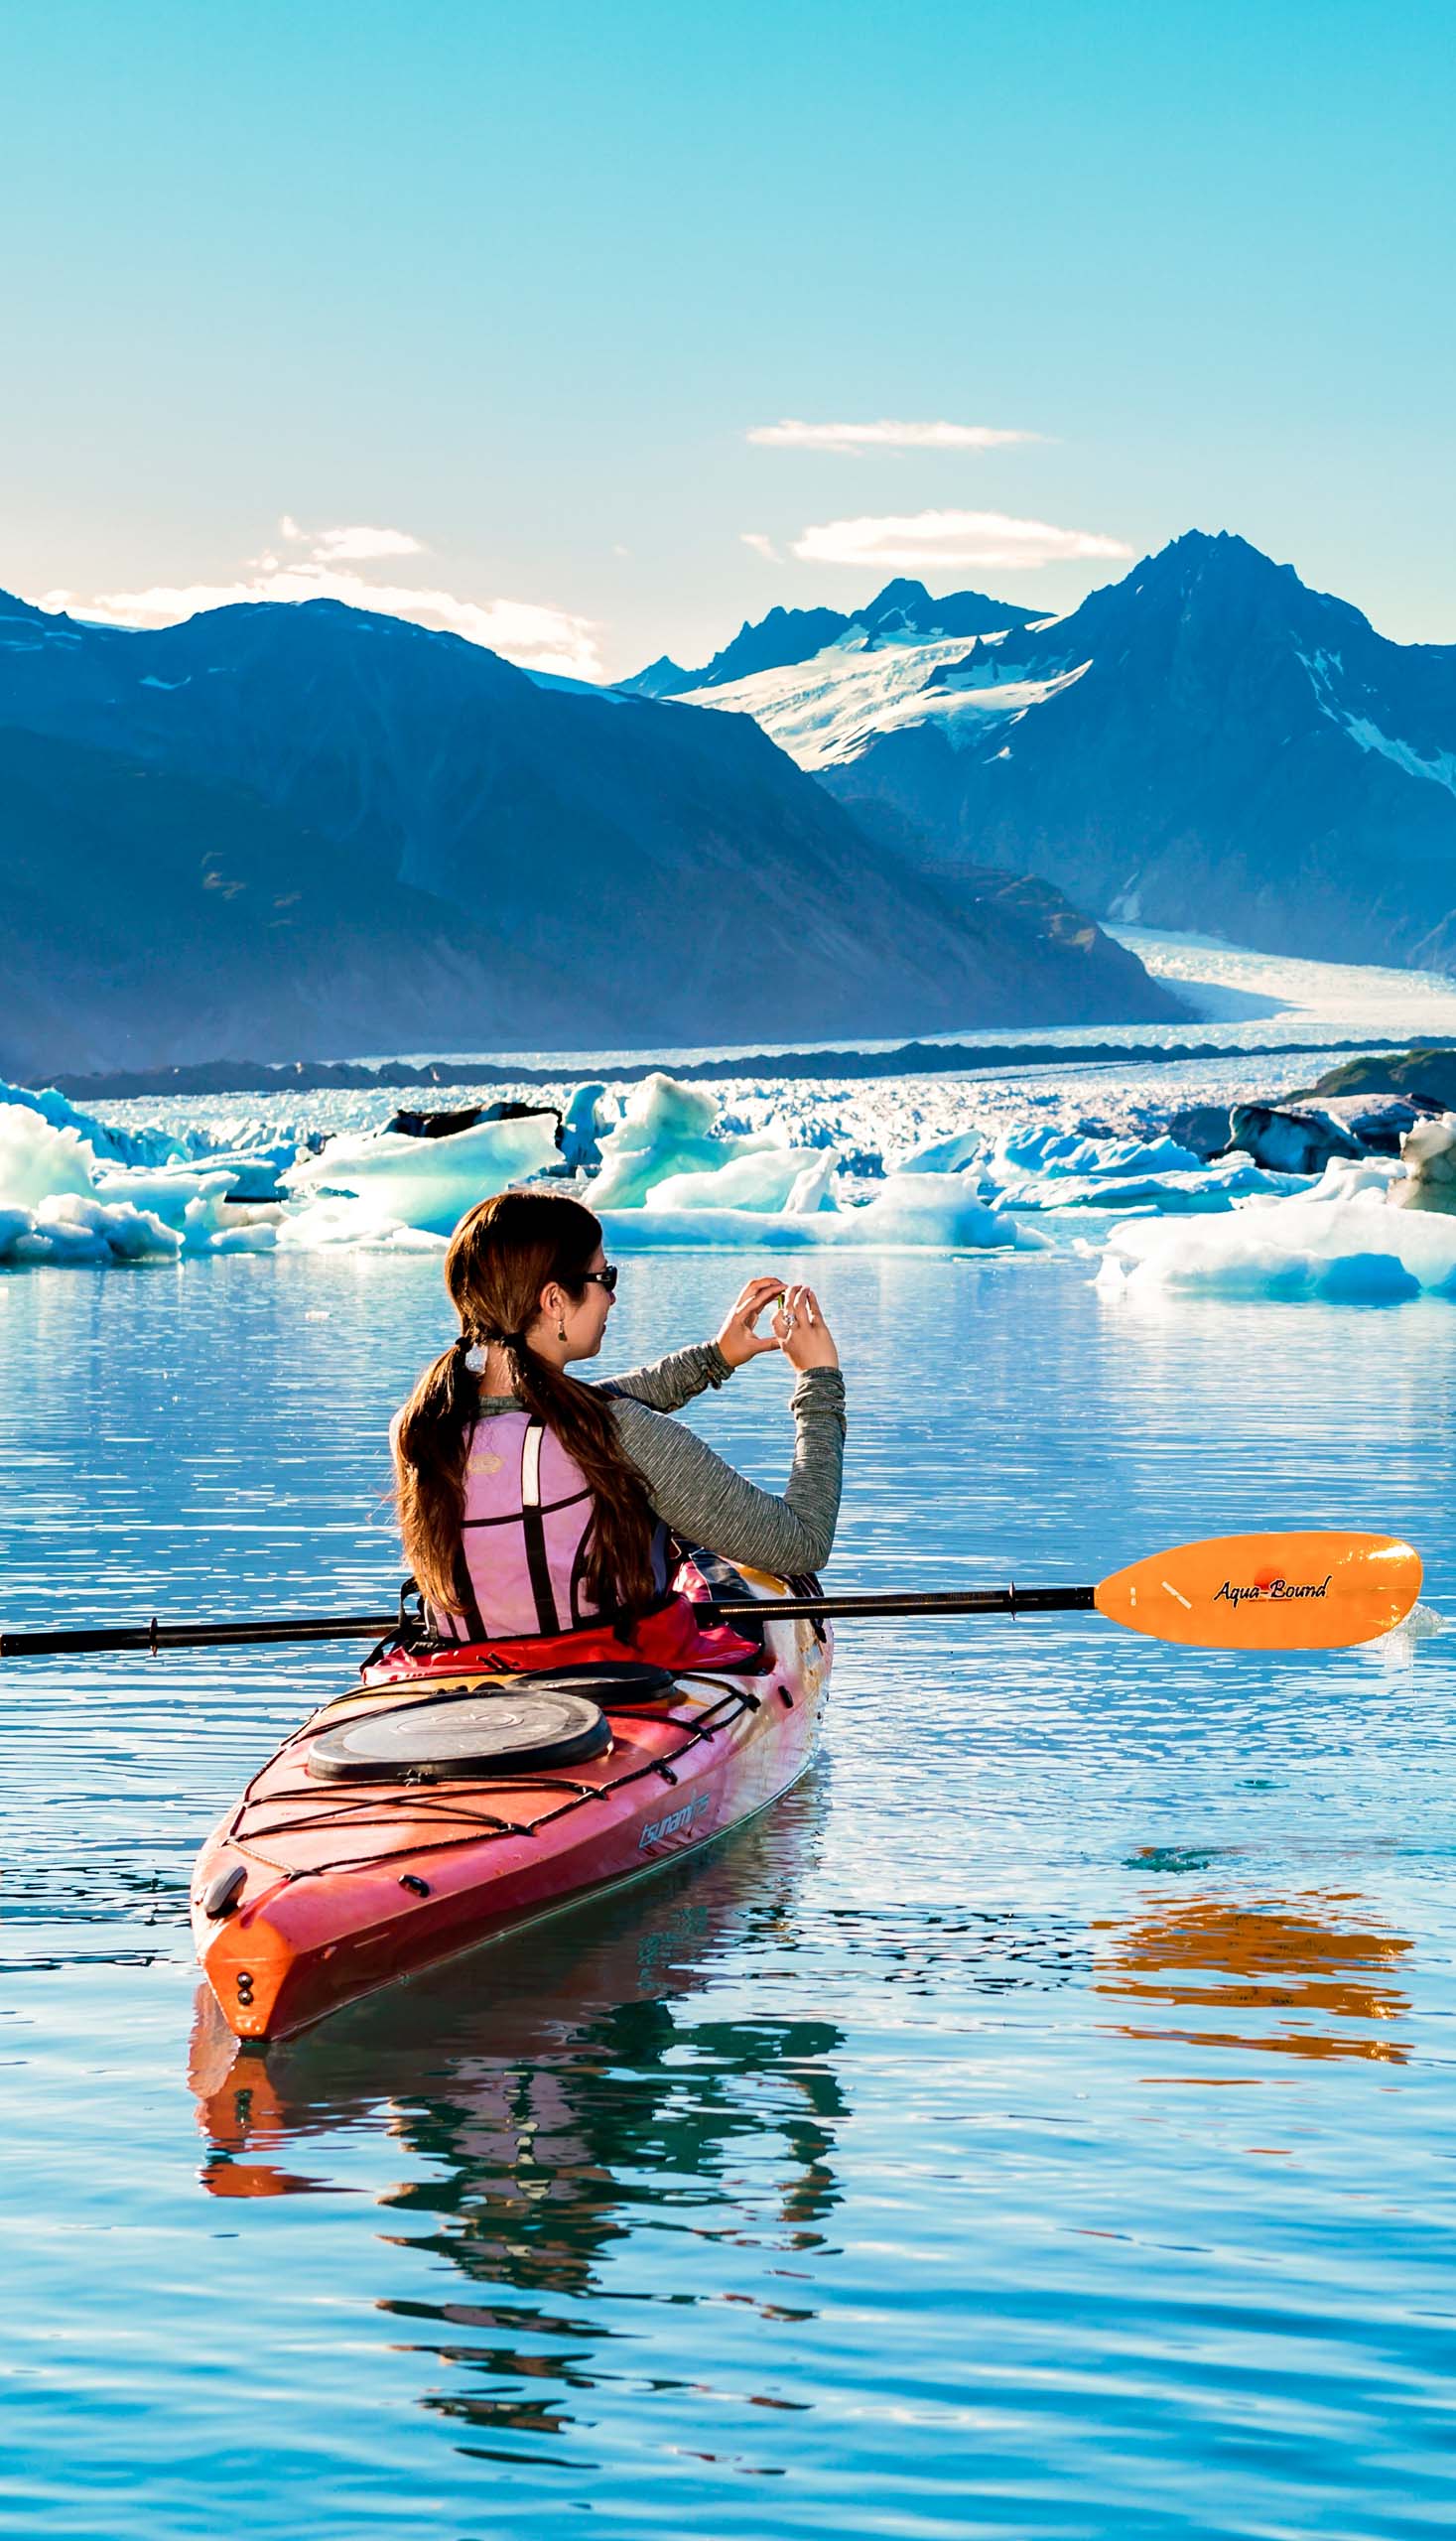 A tourist on a kayak, taking photos of icebergs.